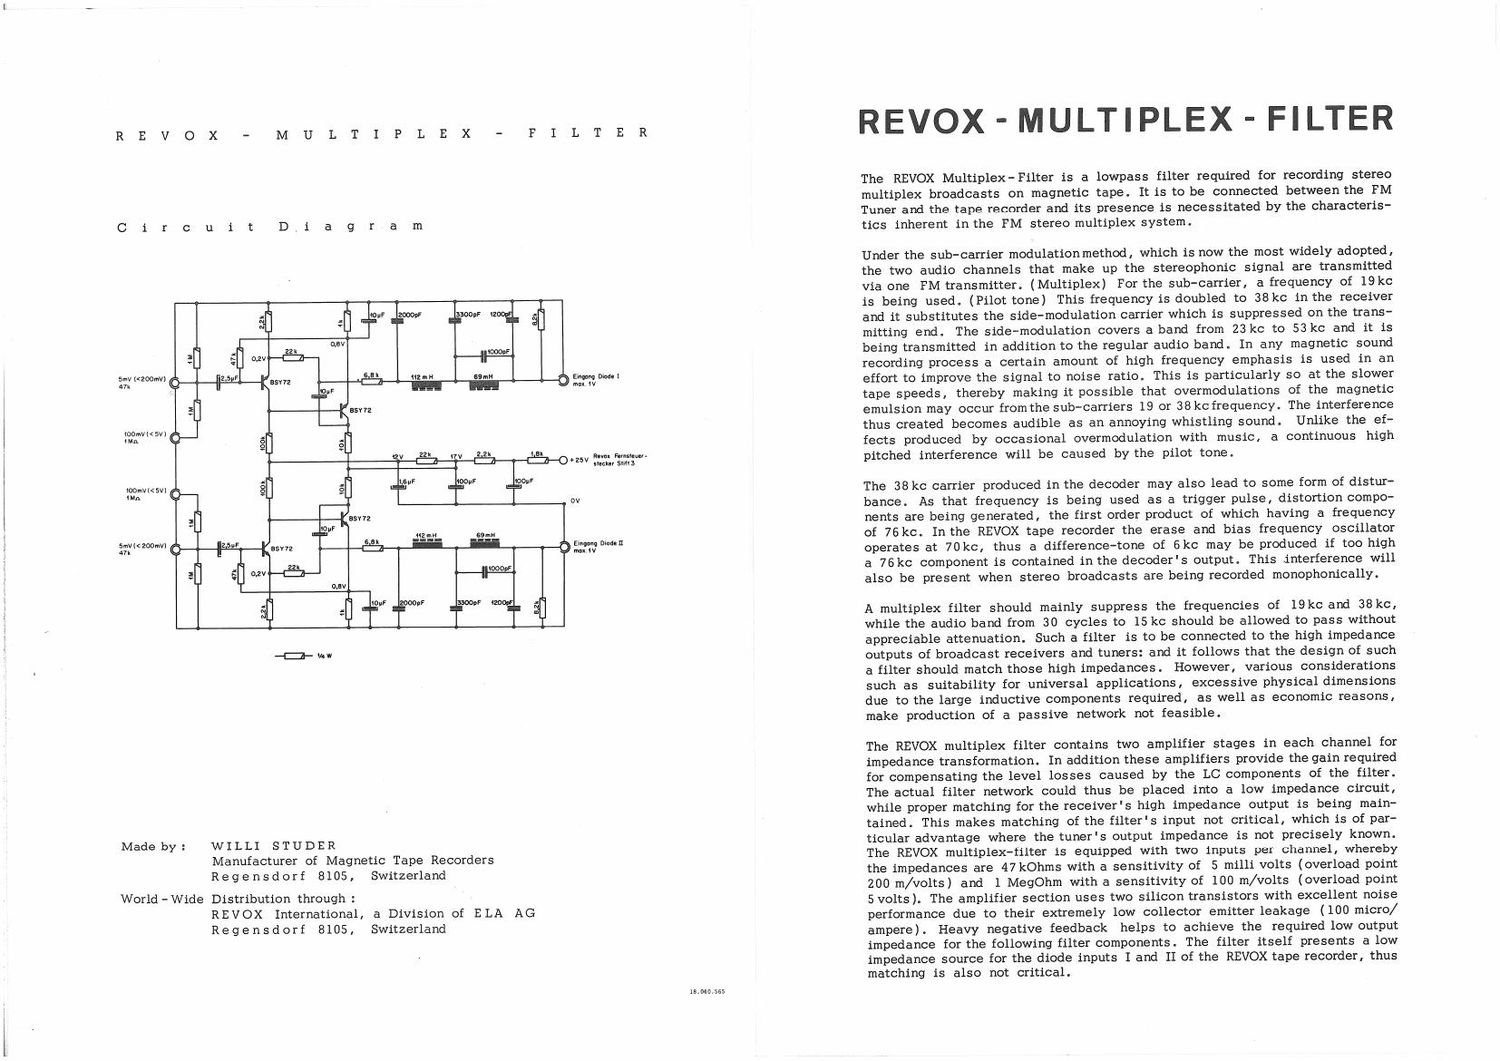 Revox MPX Filter Owners Manual